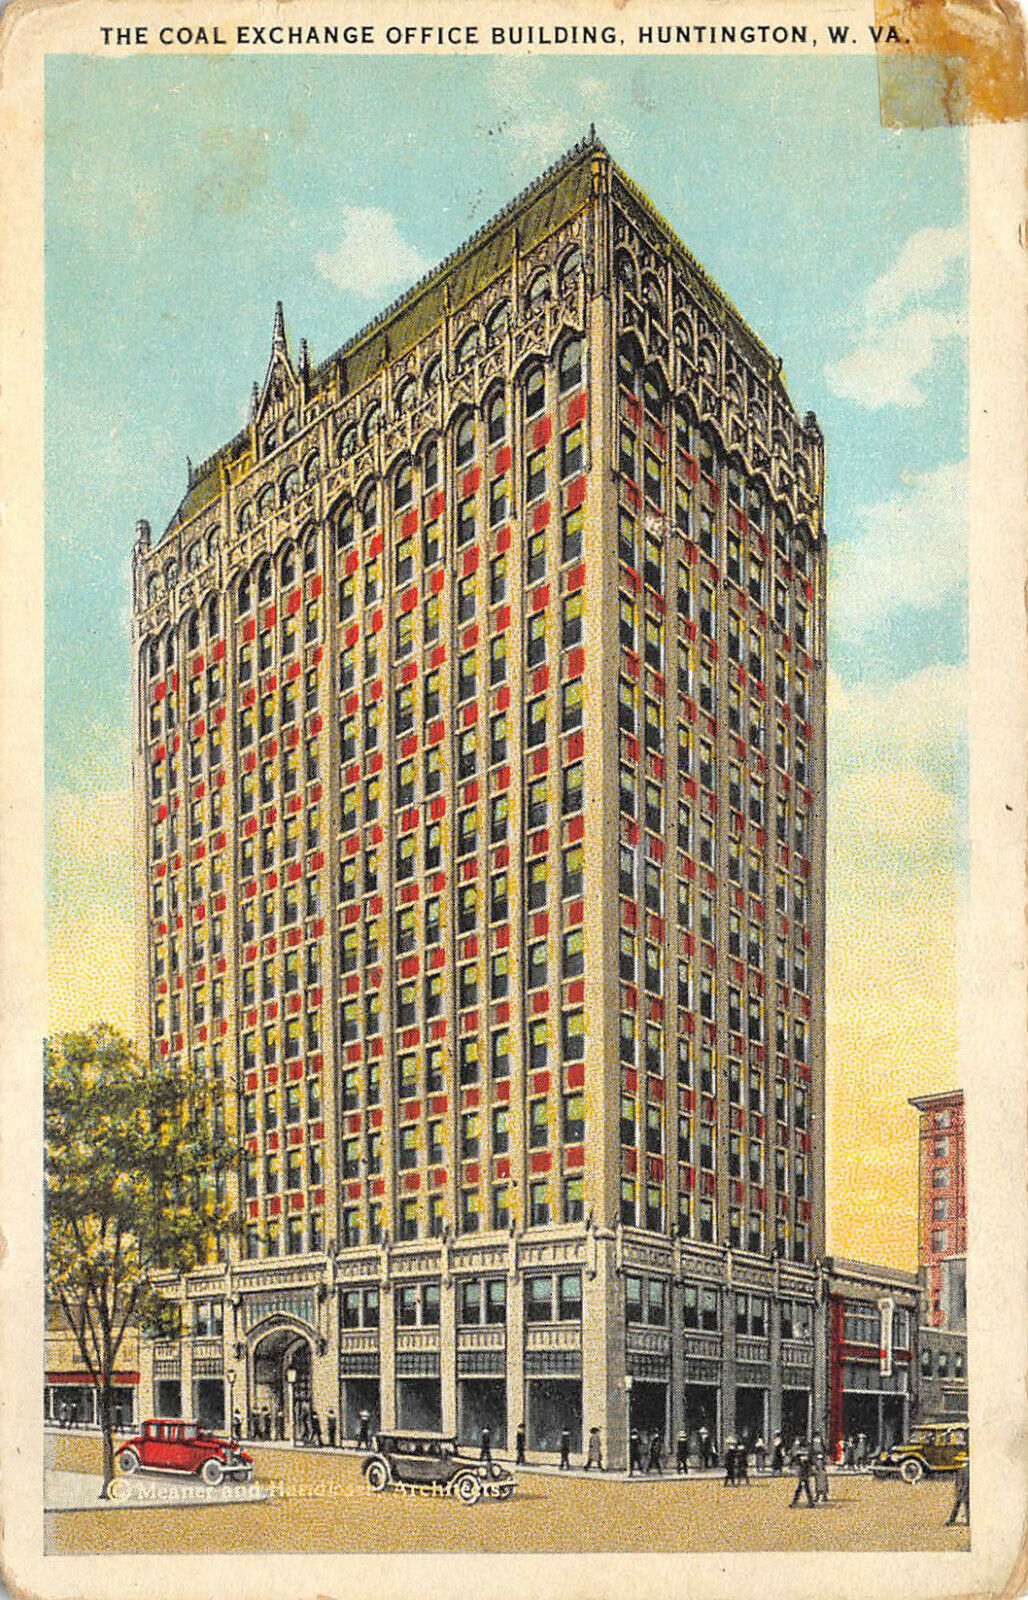 1920s postcard of the Coal Exchange Building